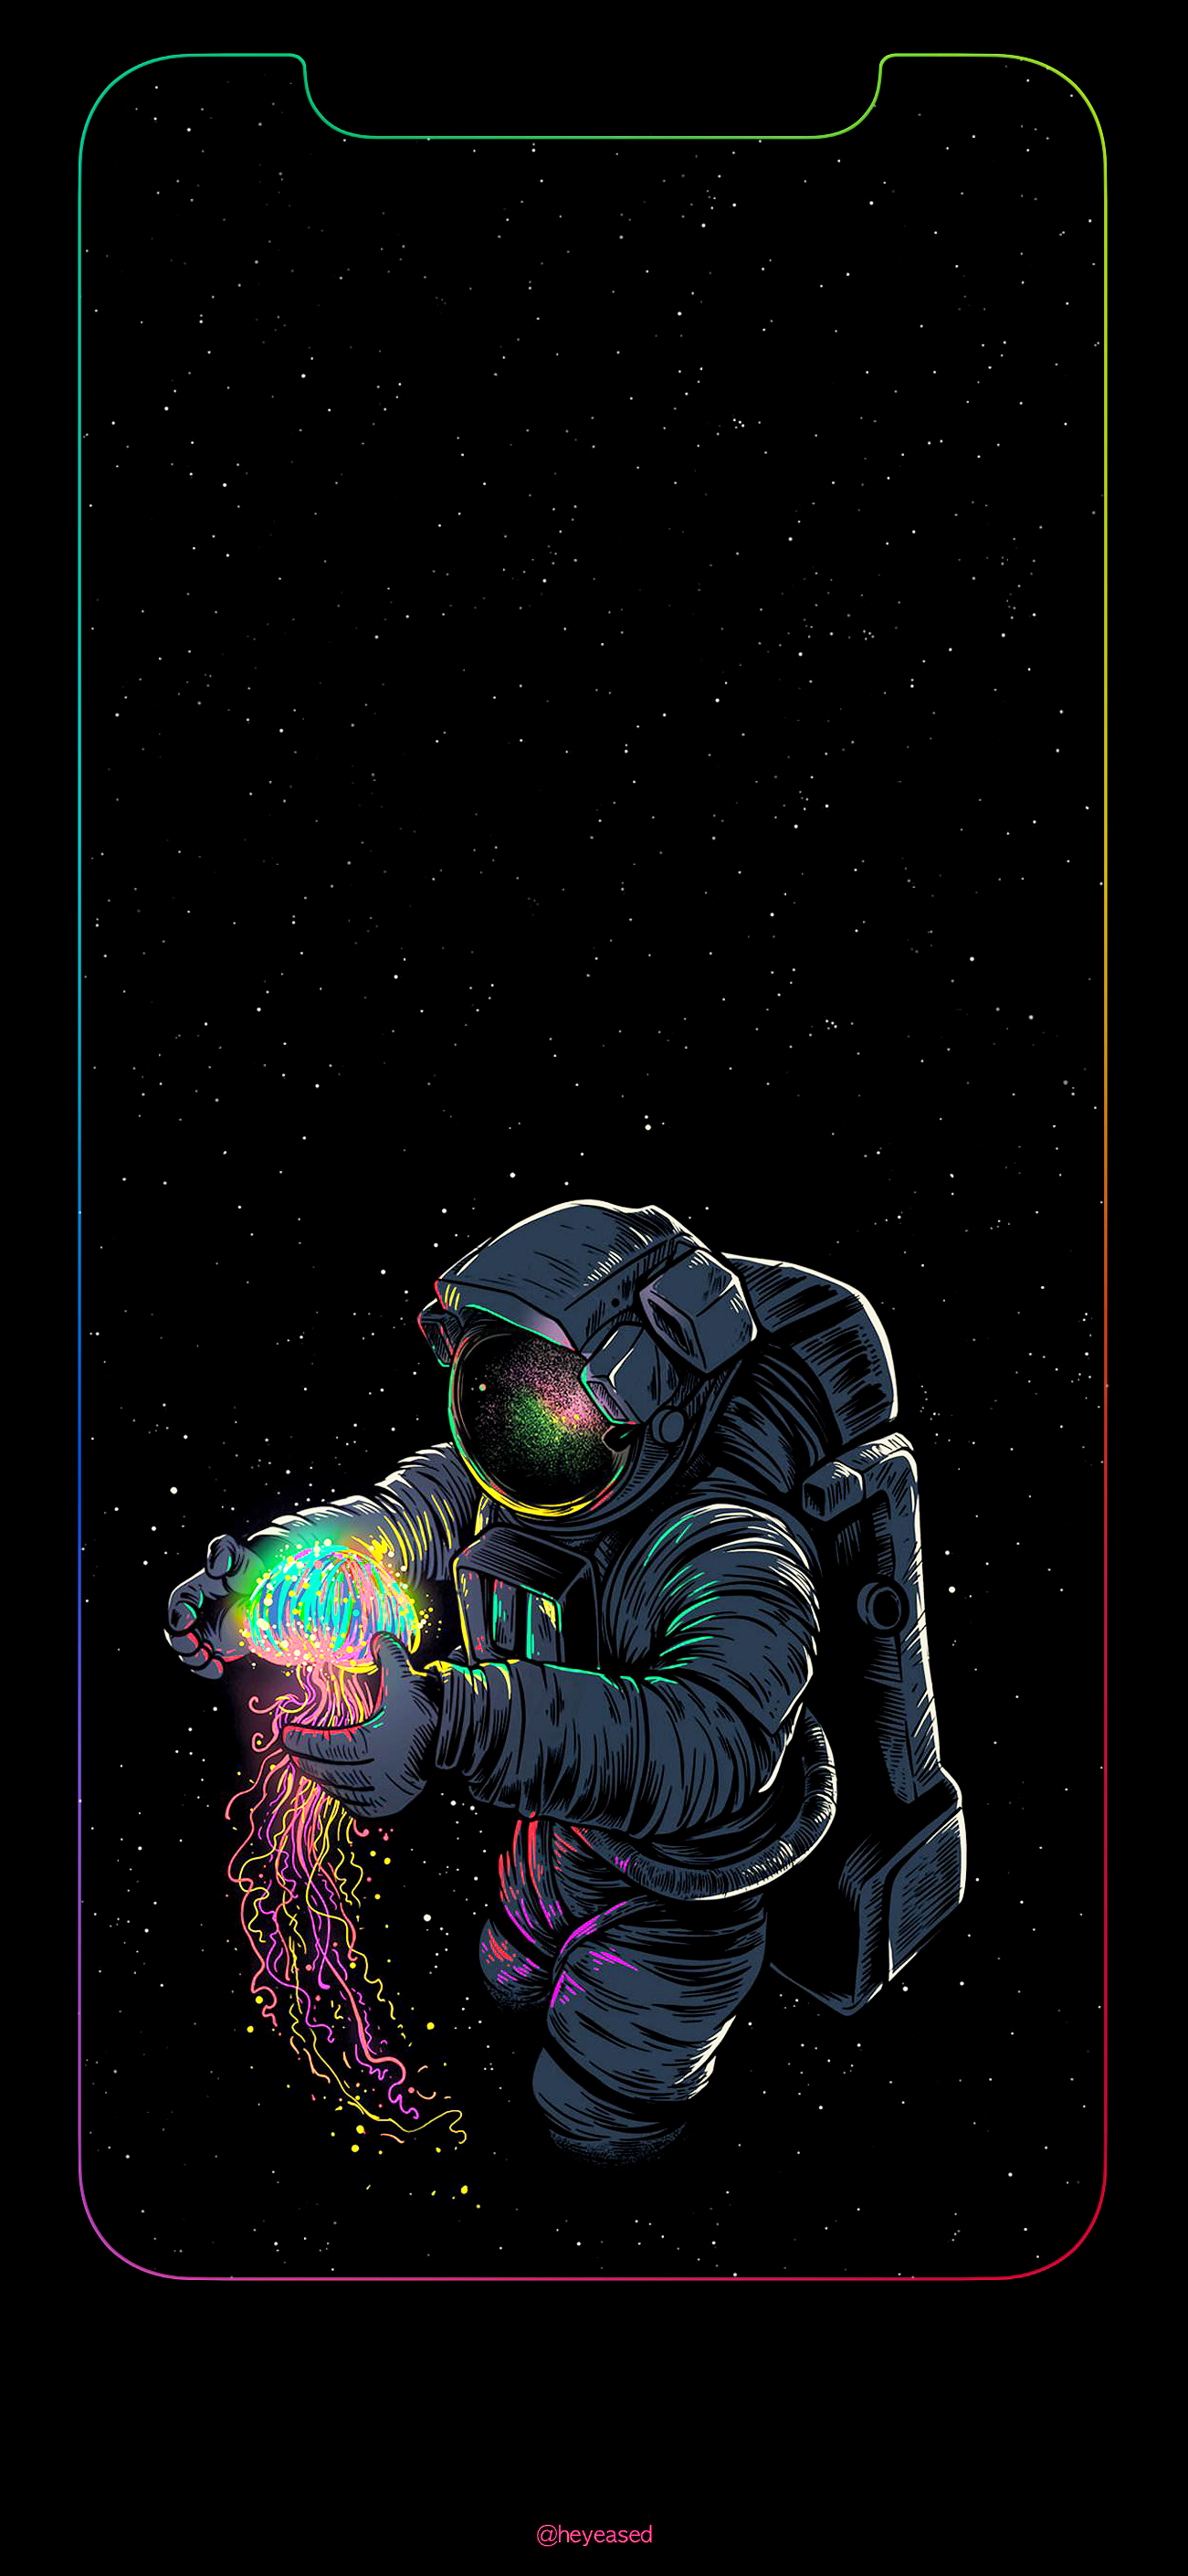 Download iPhone Xs Max Wallpaper Rainbow. Cikimm.com. iPhone creative, iPhone wallpaper astronaut, iPhone lockscreen